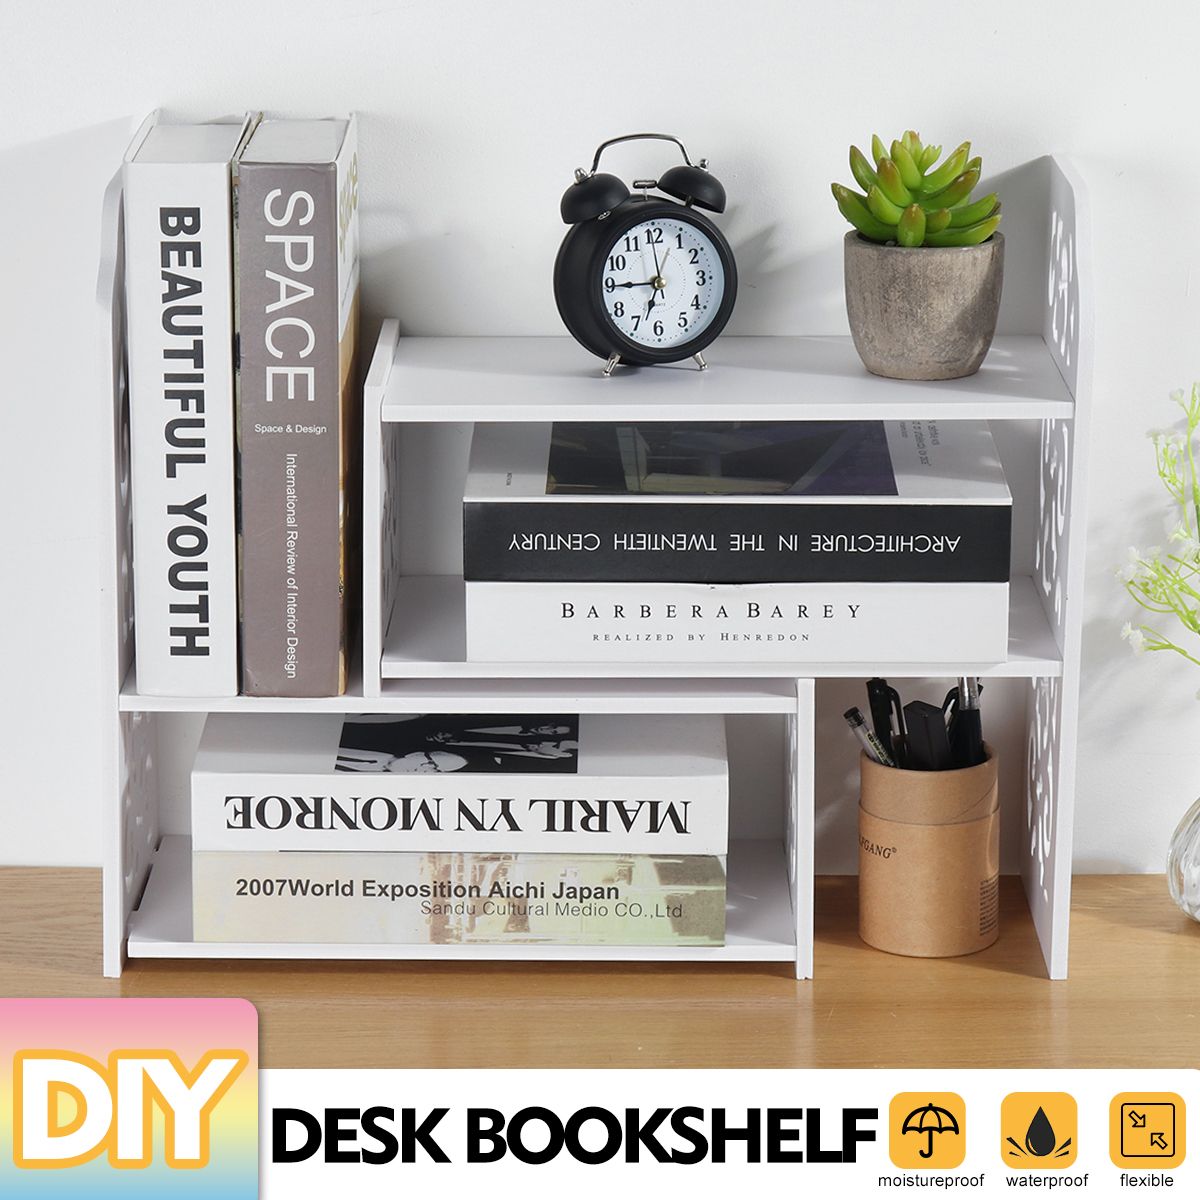 DIY-Desk-Bookshelf-Bookcase-Organizer-Rack-Office-Unit-Storage-Box-Shelf-Stand-1632247